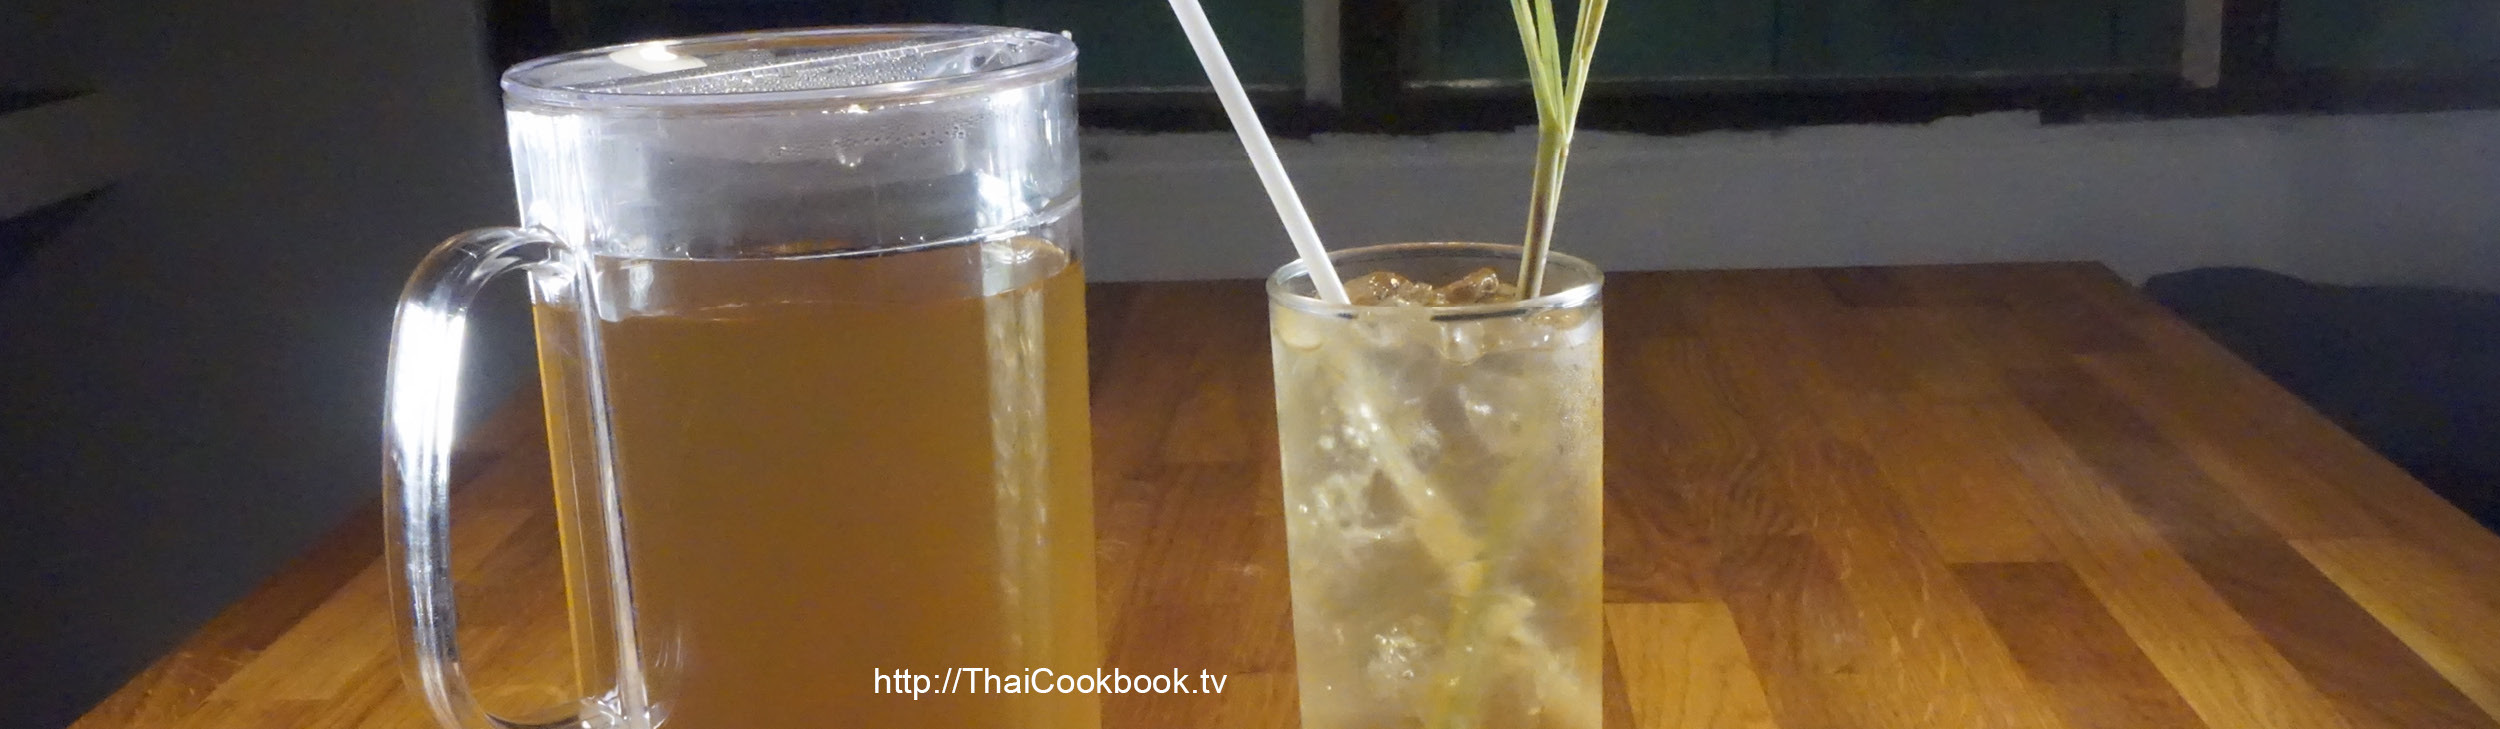 Authentic Thai recipe for Lemongrass and Pandan Iced Tea